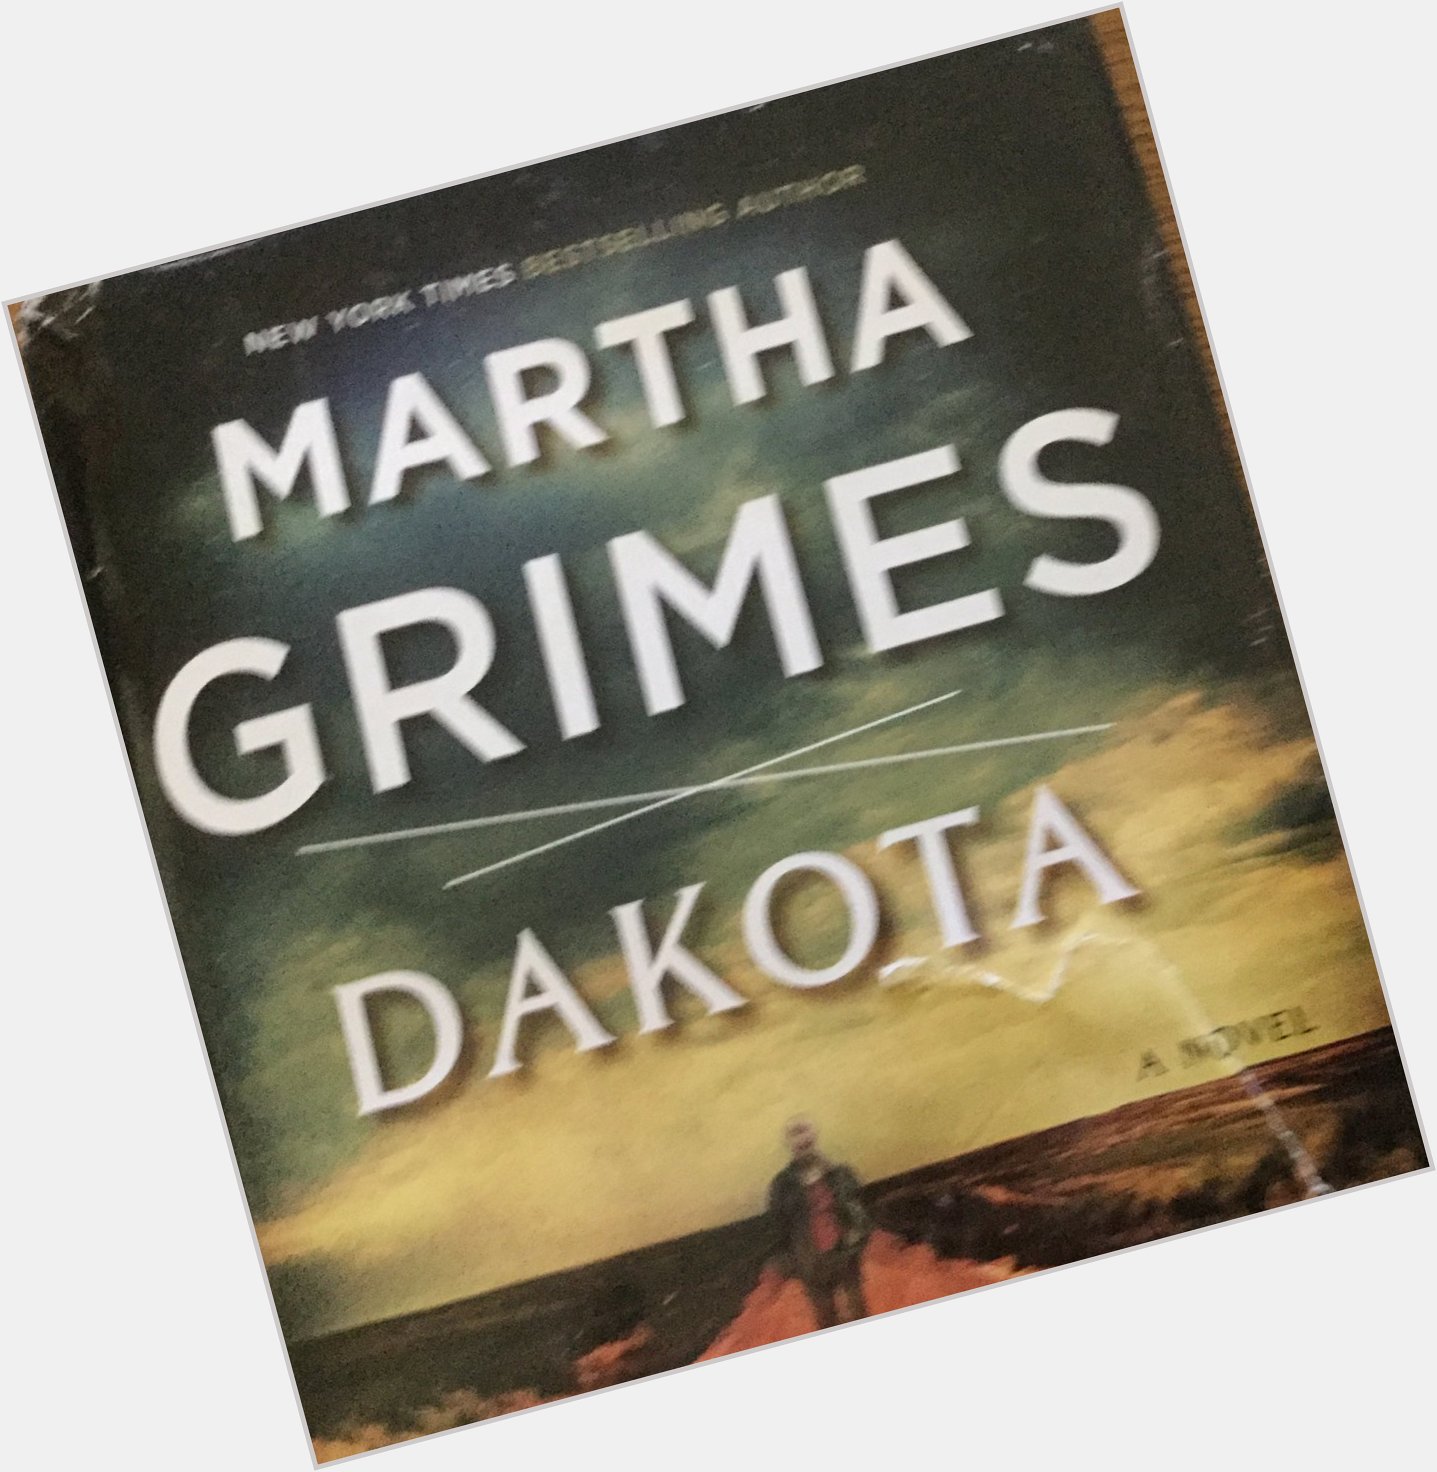  Happy birthday Martha Grimes! 